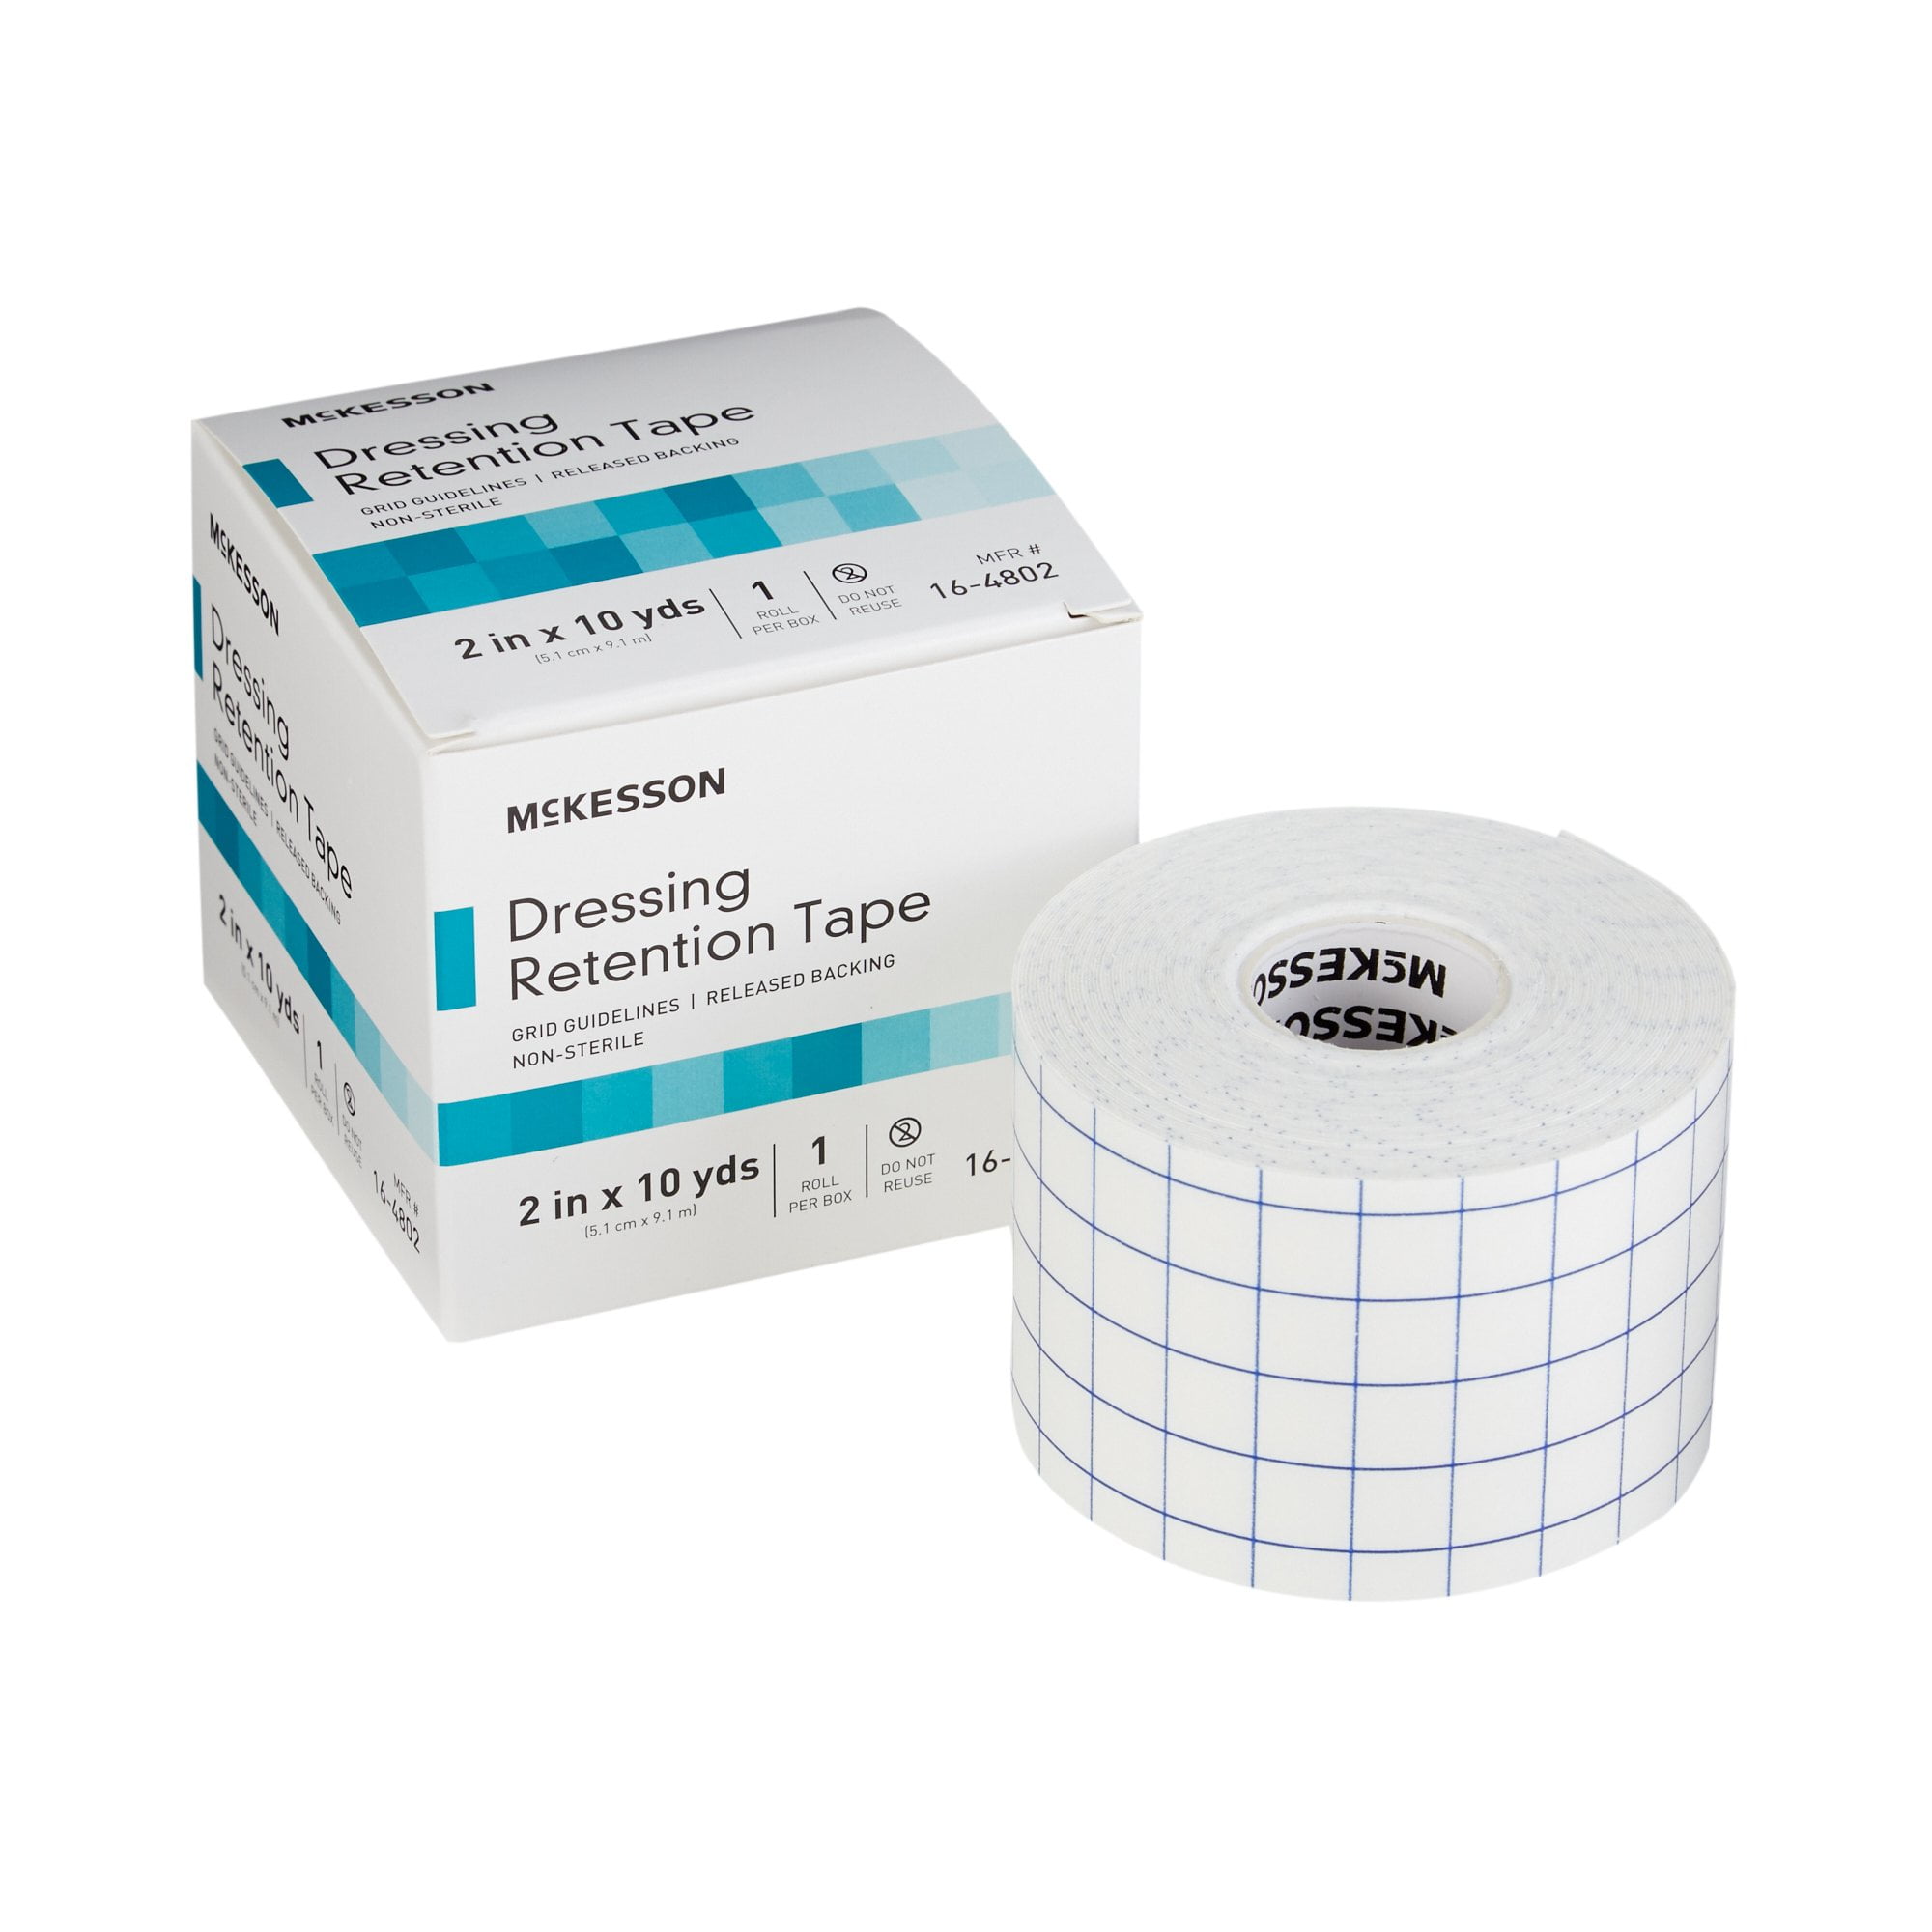 Nexcare 2 Non-Irritating Gentle Paper Tape Delivery - DoorDash